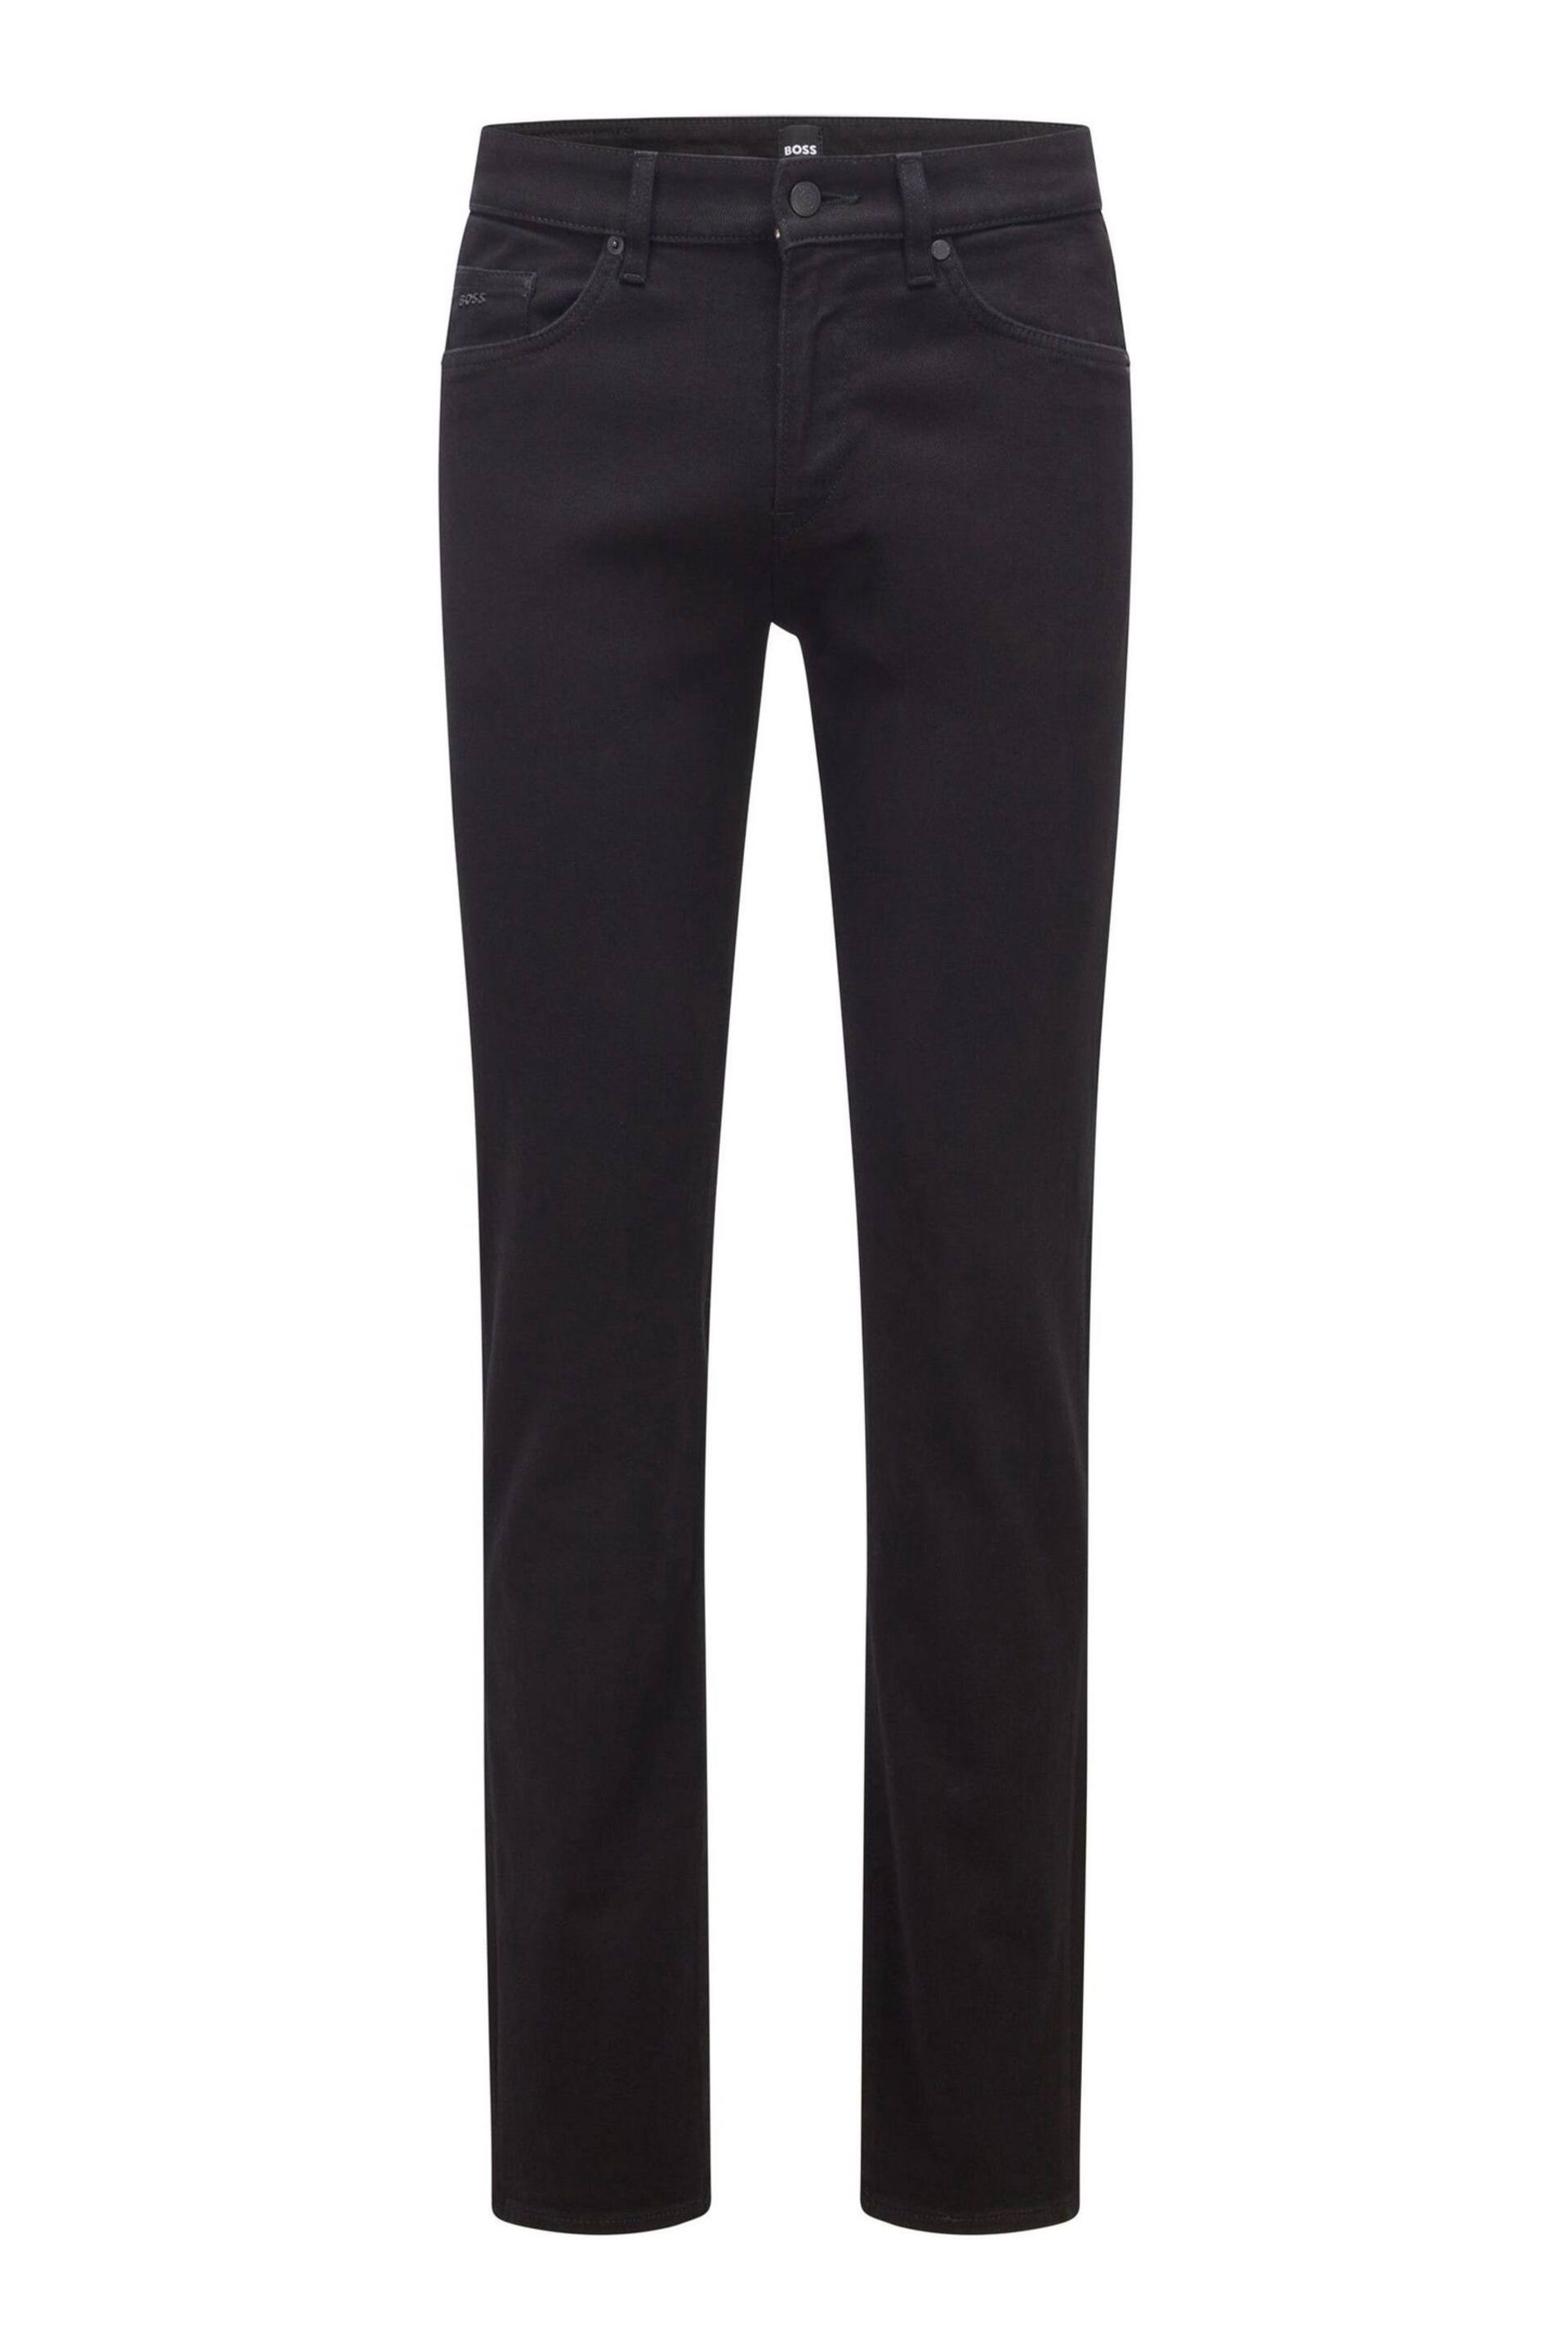 BOSS Black Delaware Slim Fit Stretch Jeans - Image 5 of 5